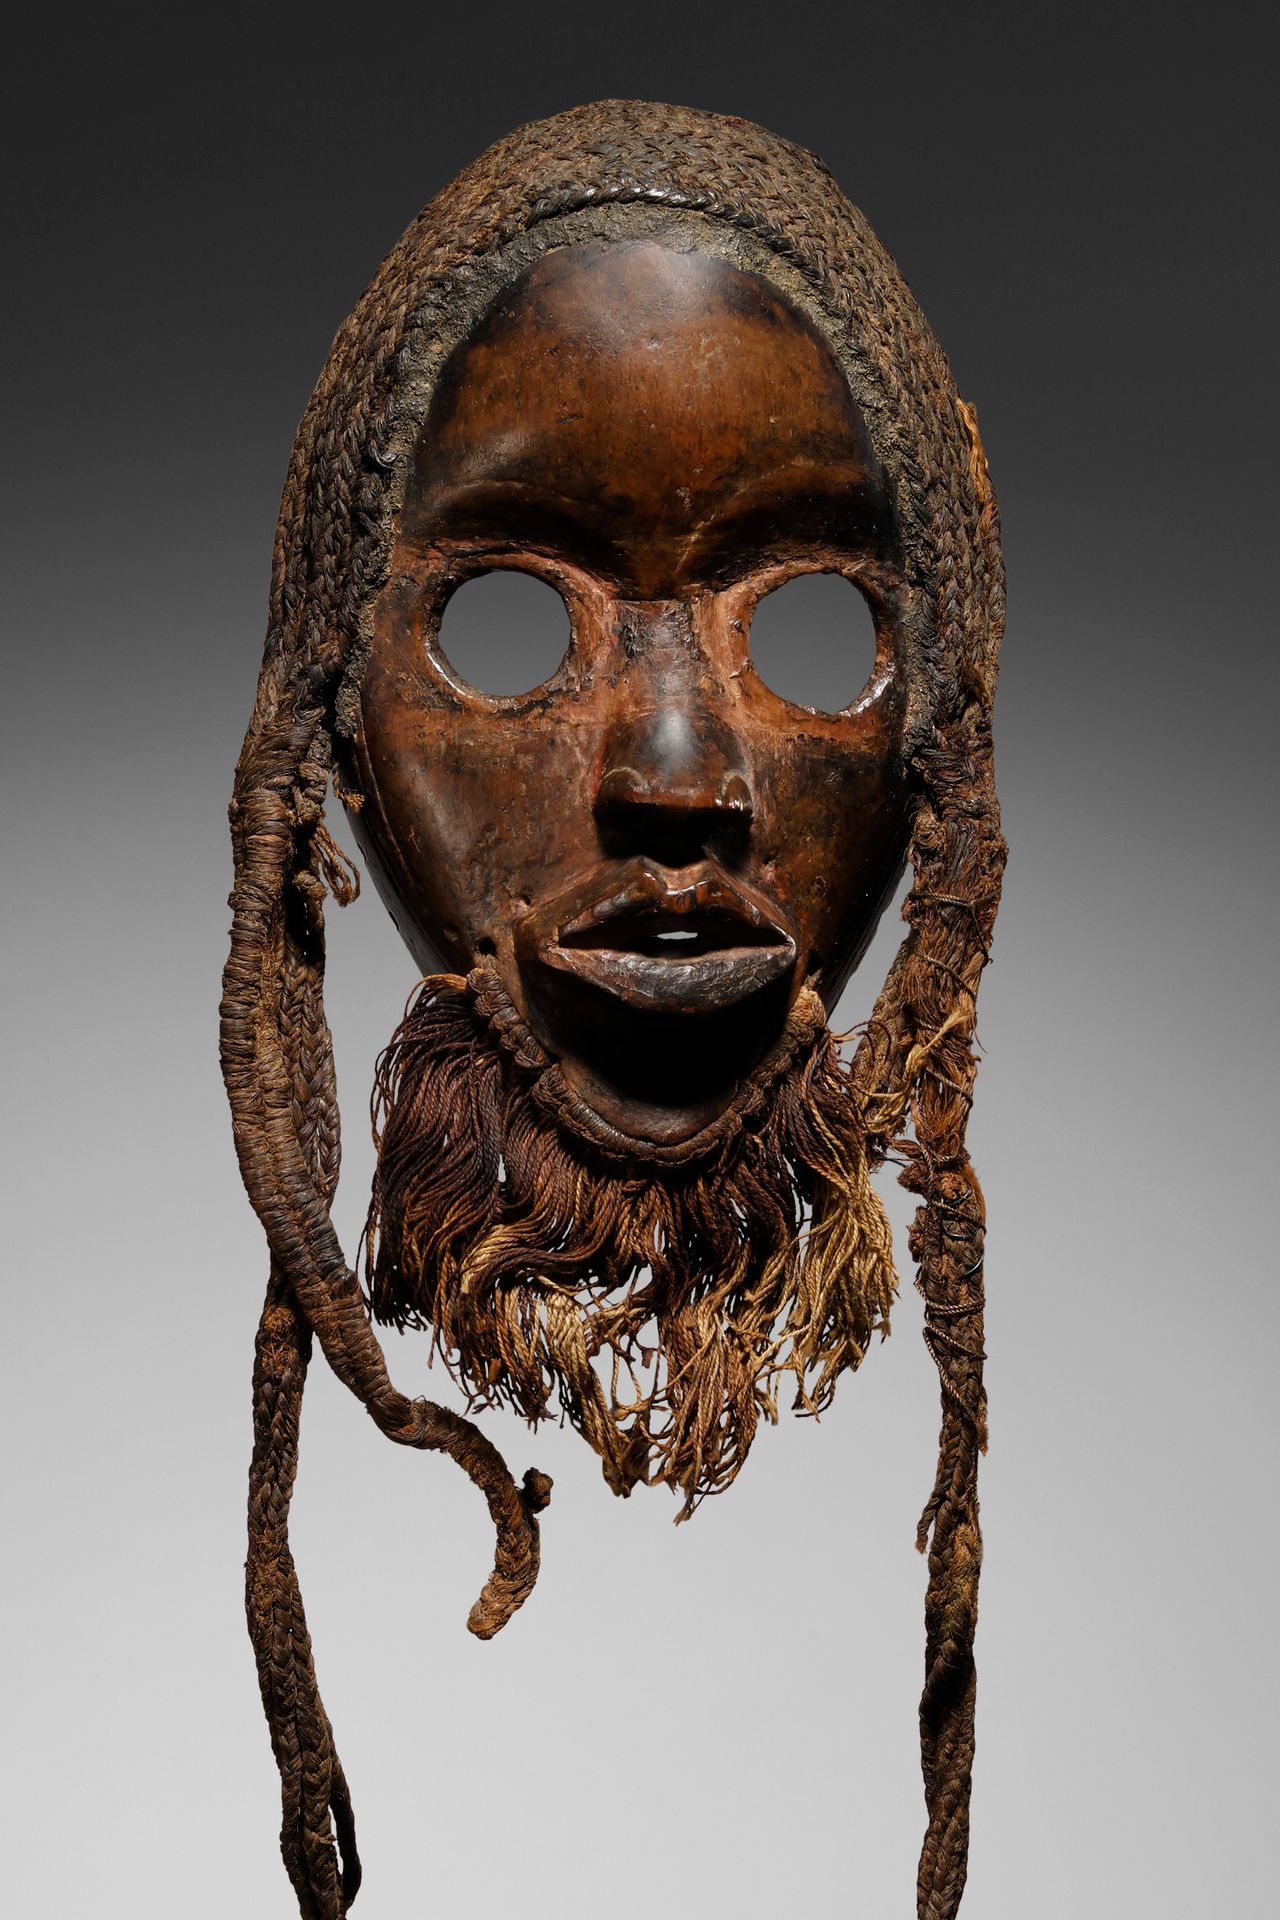 DAN MASK Ivory Coast

Holz und Fasern

23 cm (mask) - 53 cm (gesamt)

Herkunft:
&hellip;